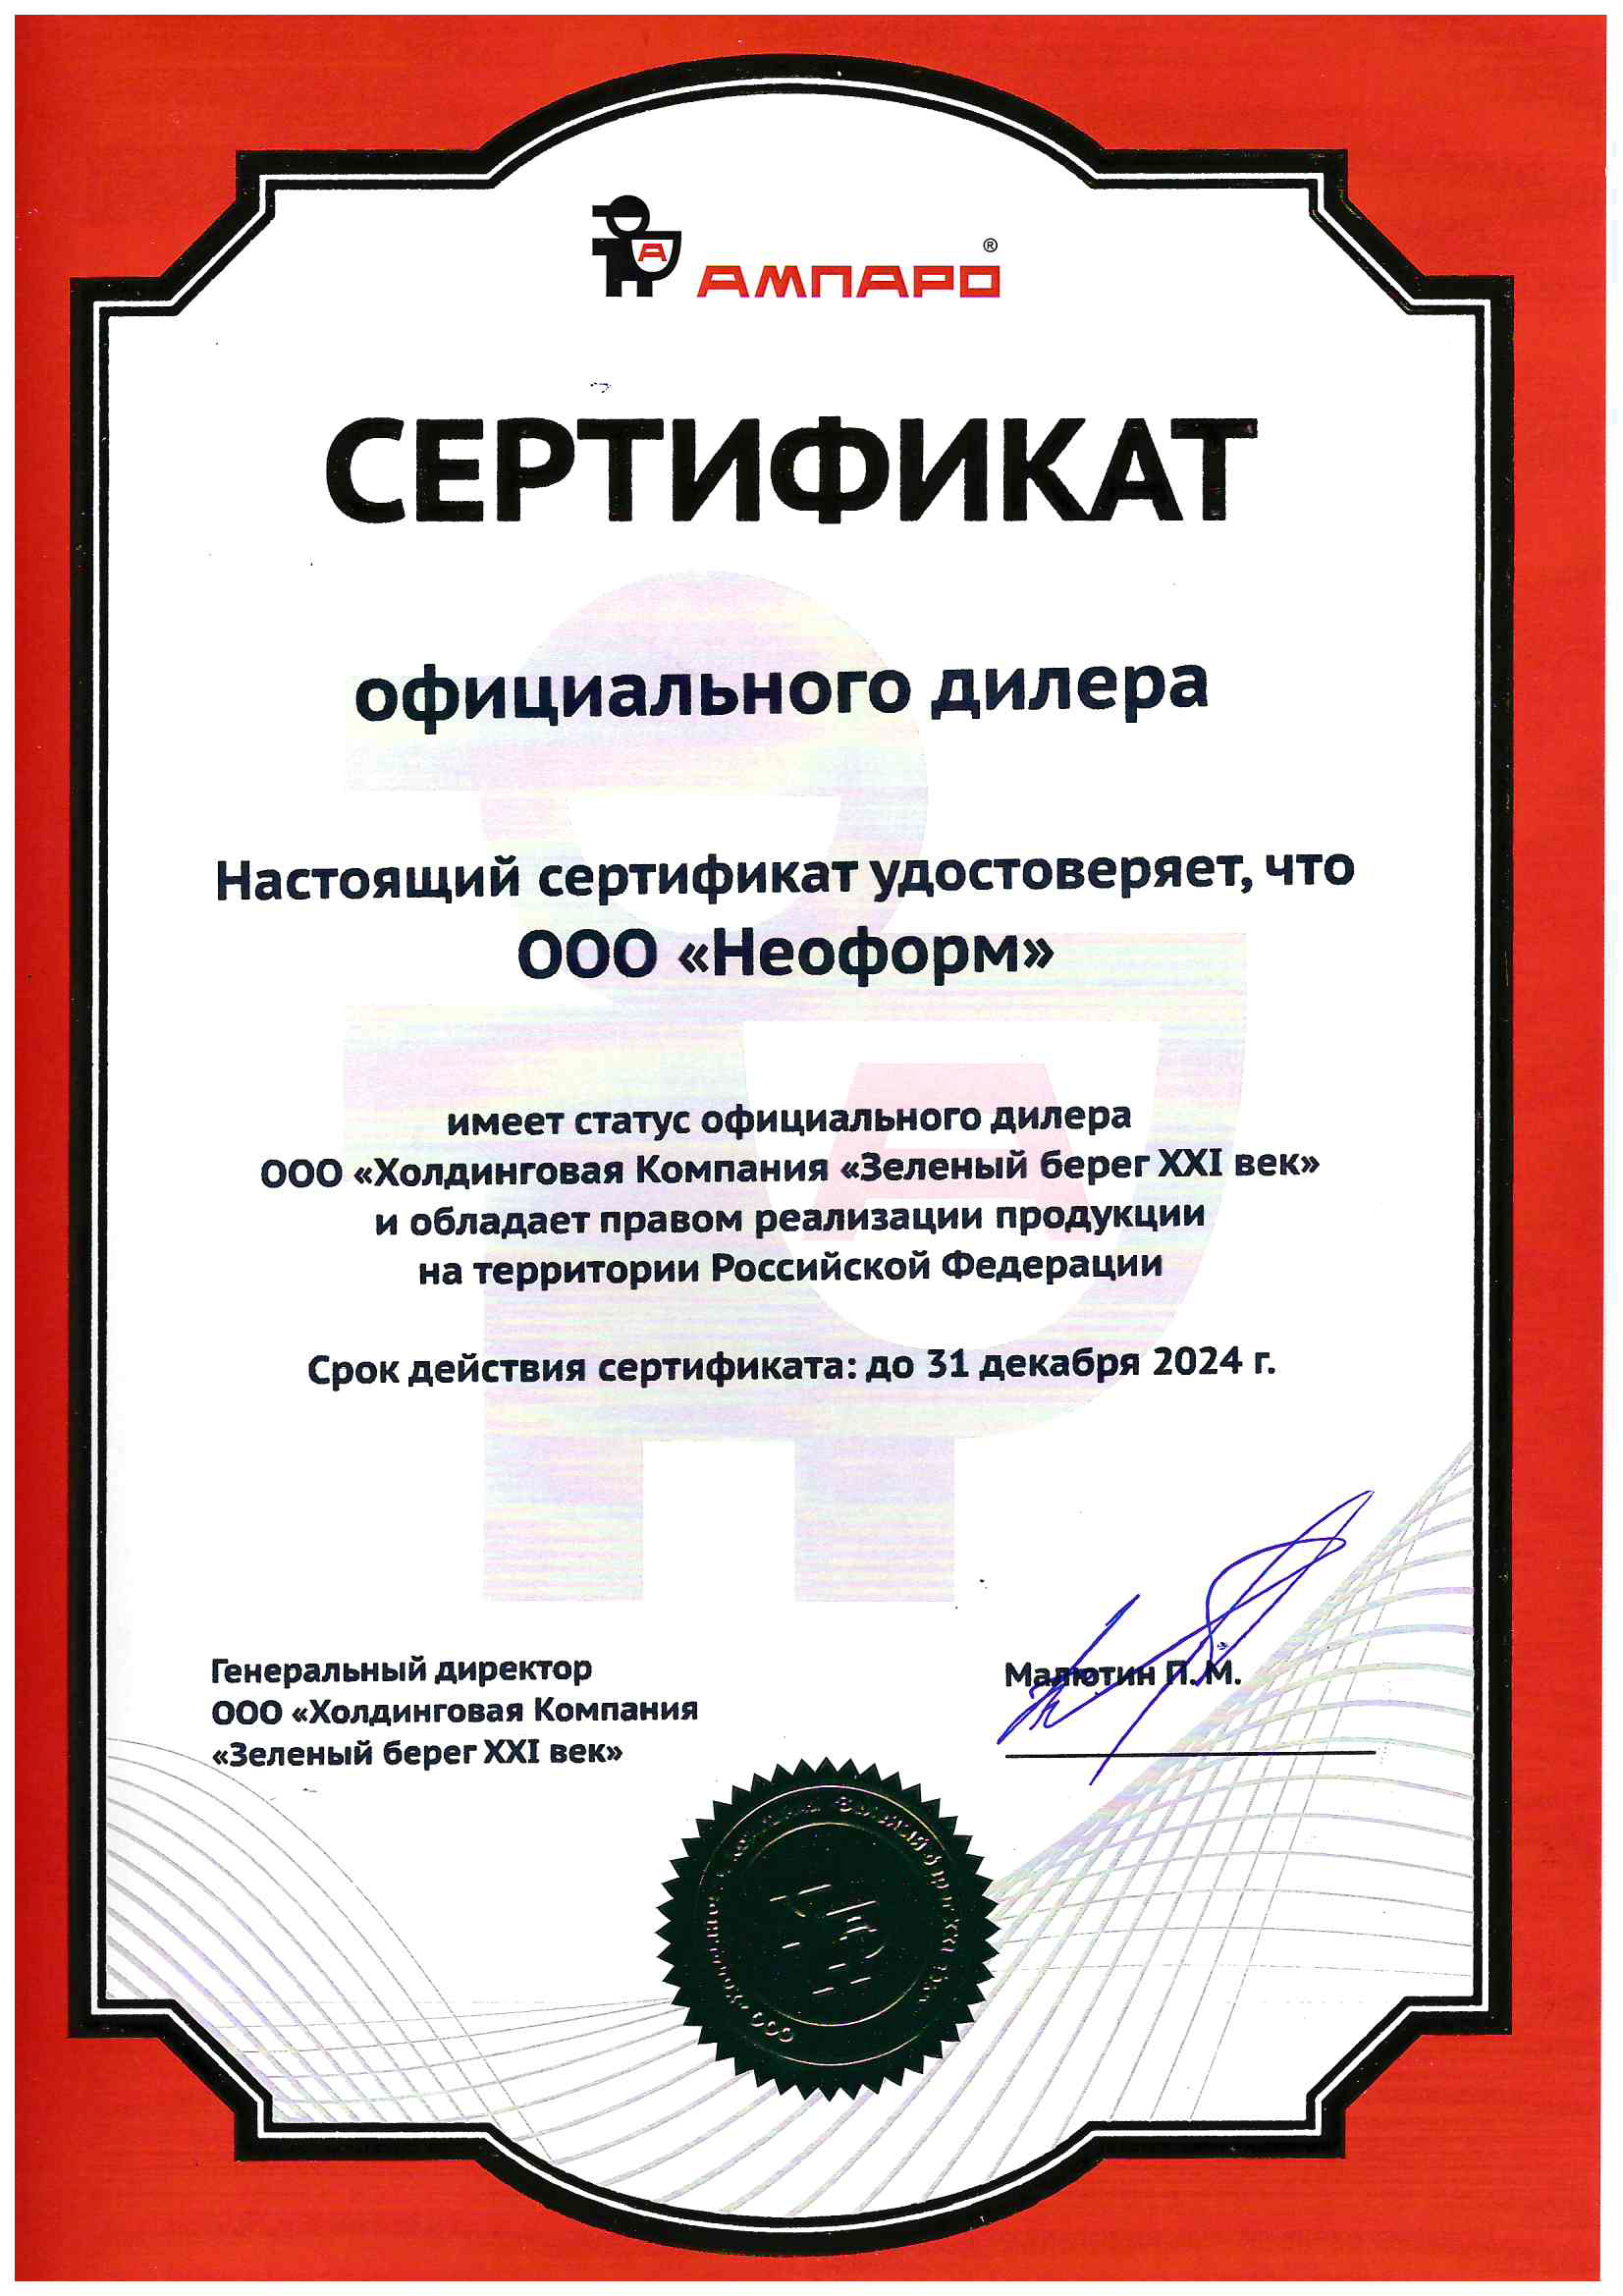 Сертификат дилера Ампаро